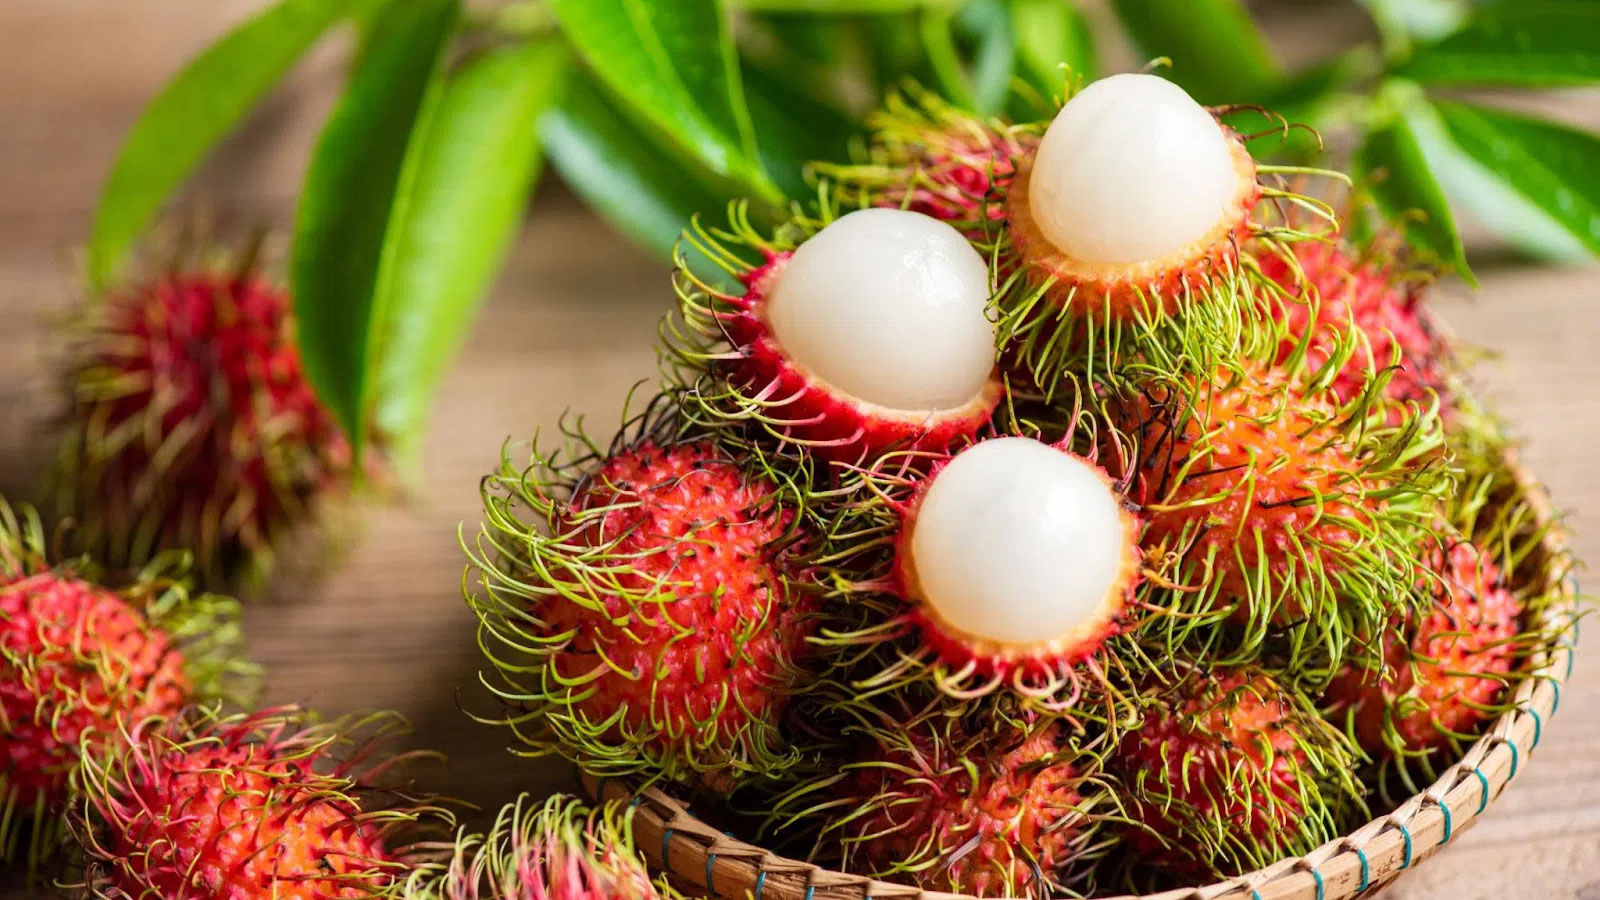 Vietnamese fruit season overview